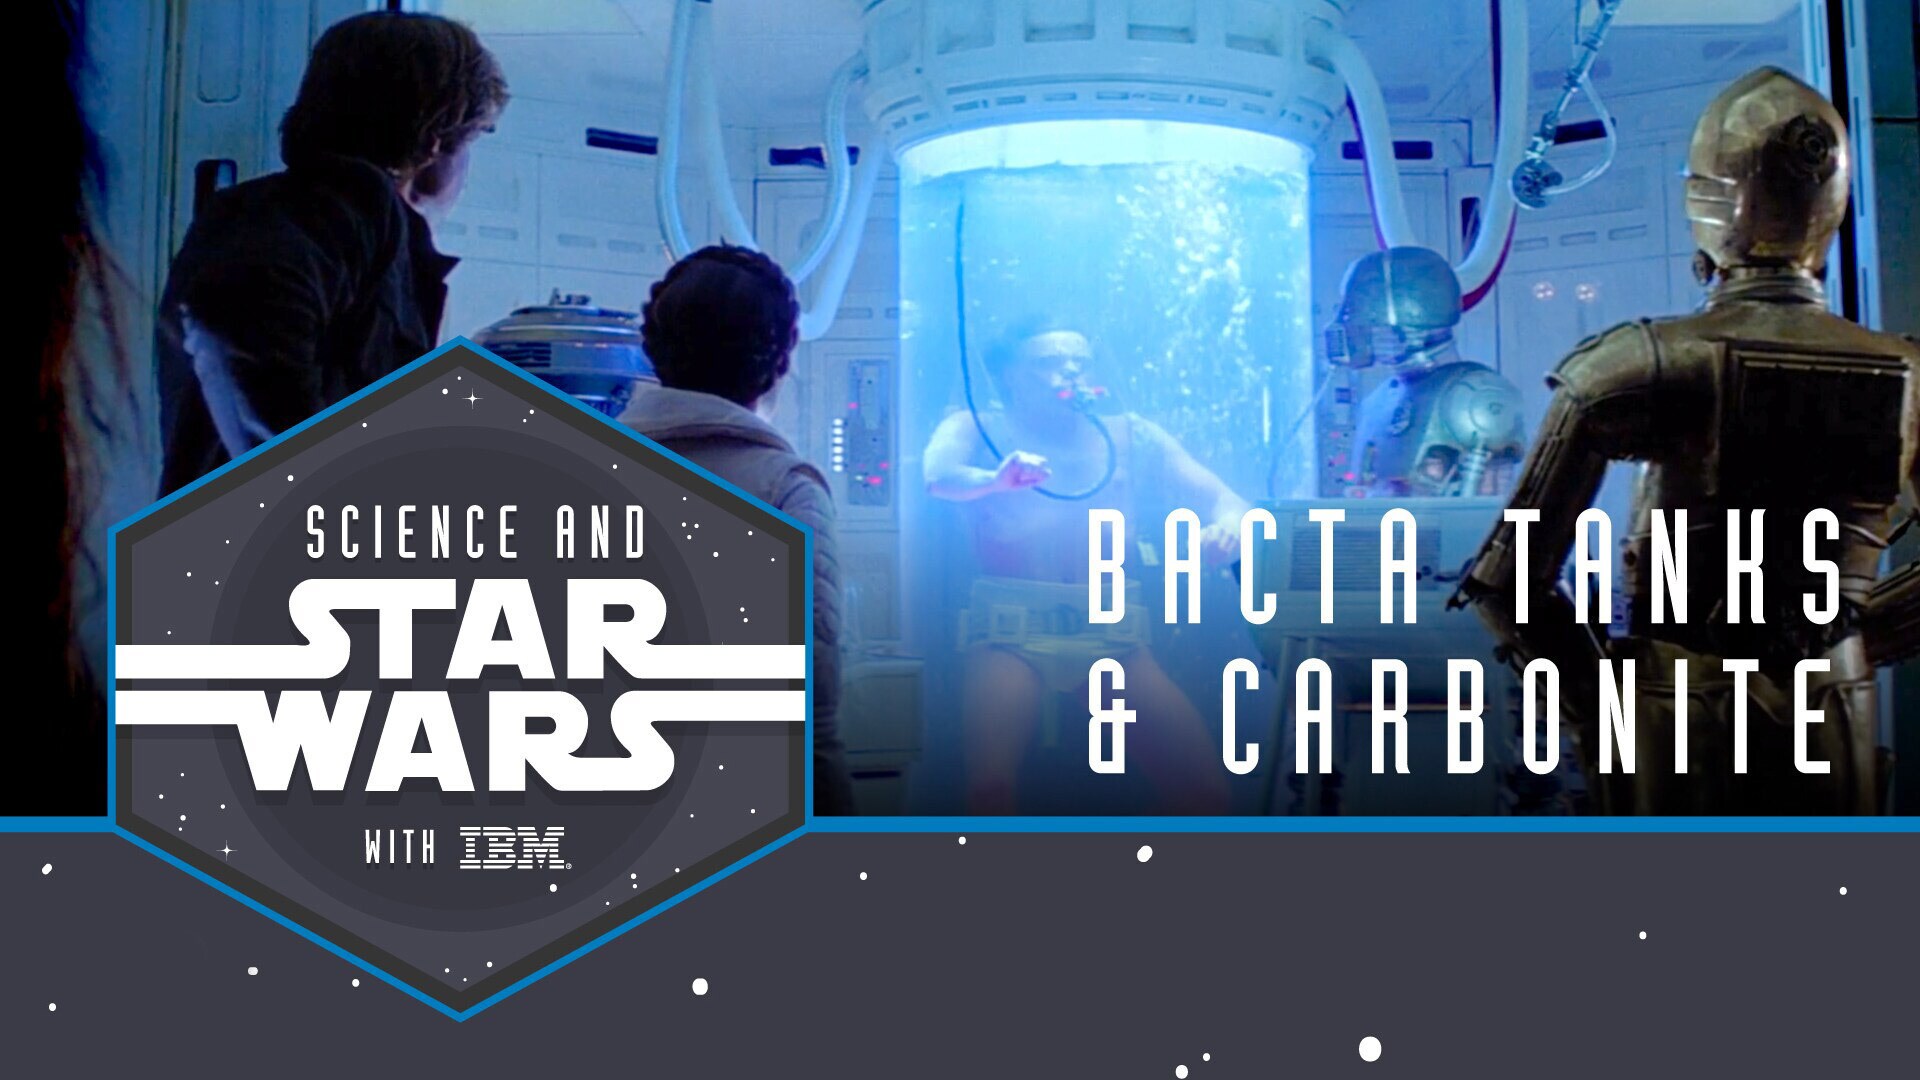 Bacta Tanks and Carbonite | Science and Star Wars